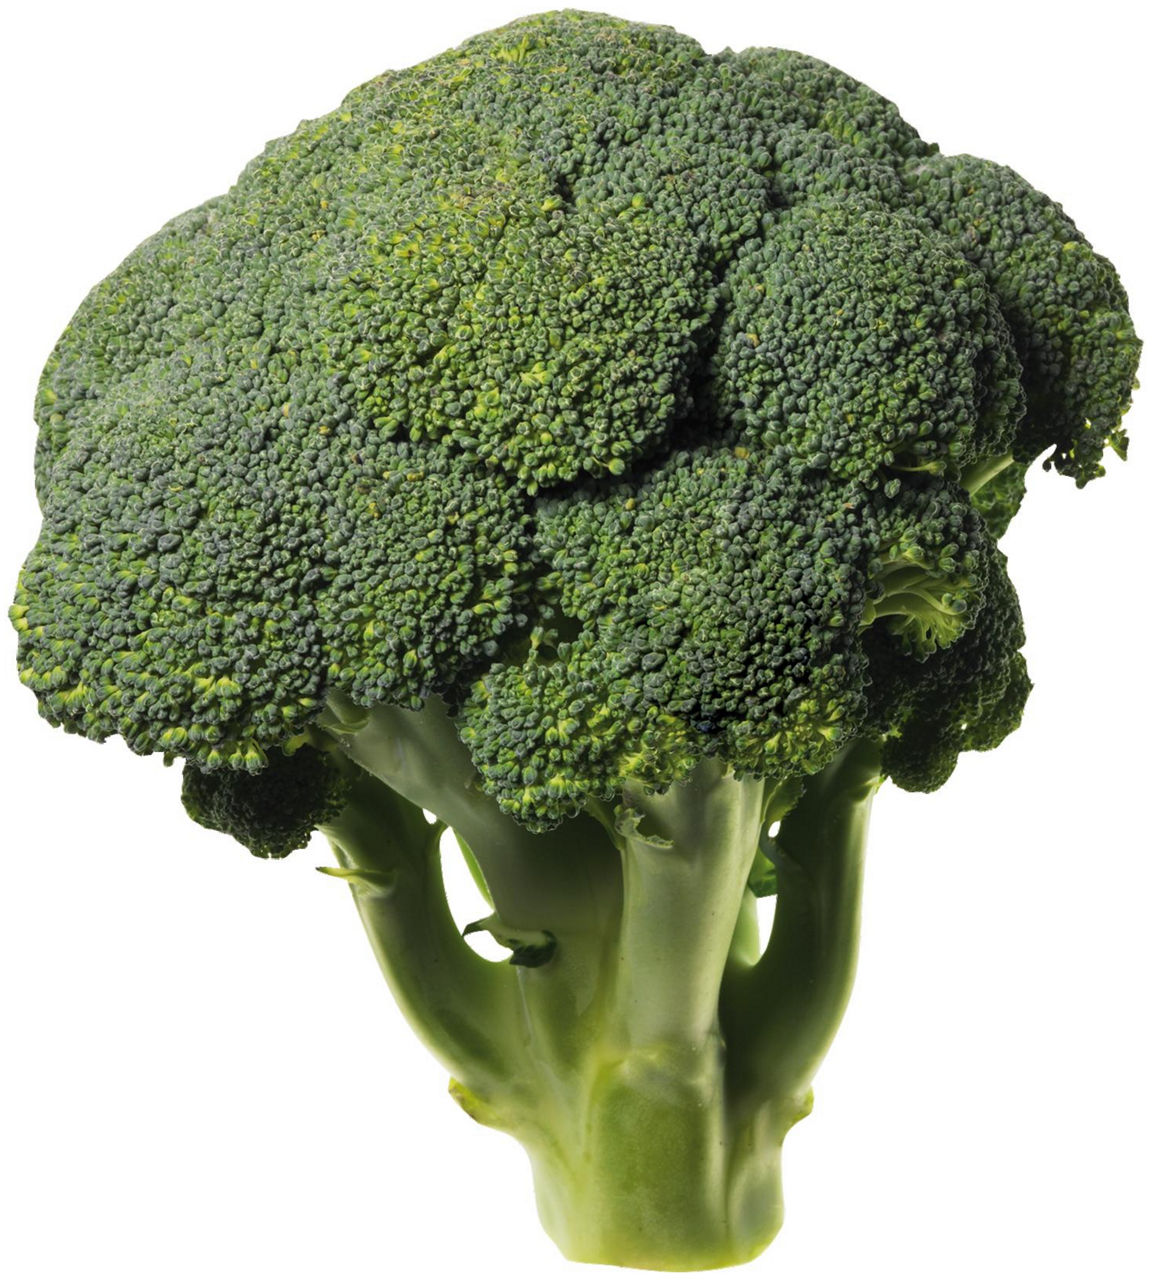 Cavoli broccoli